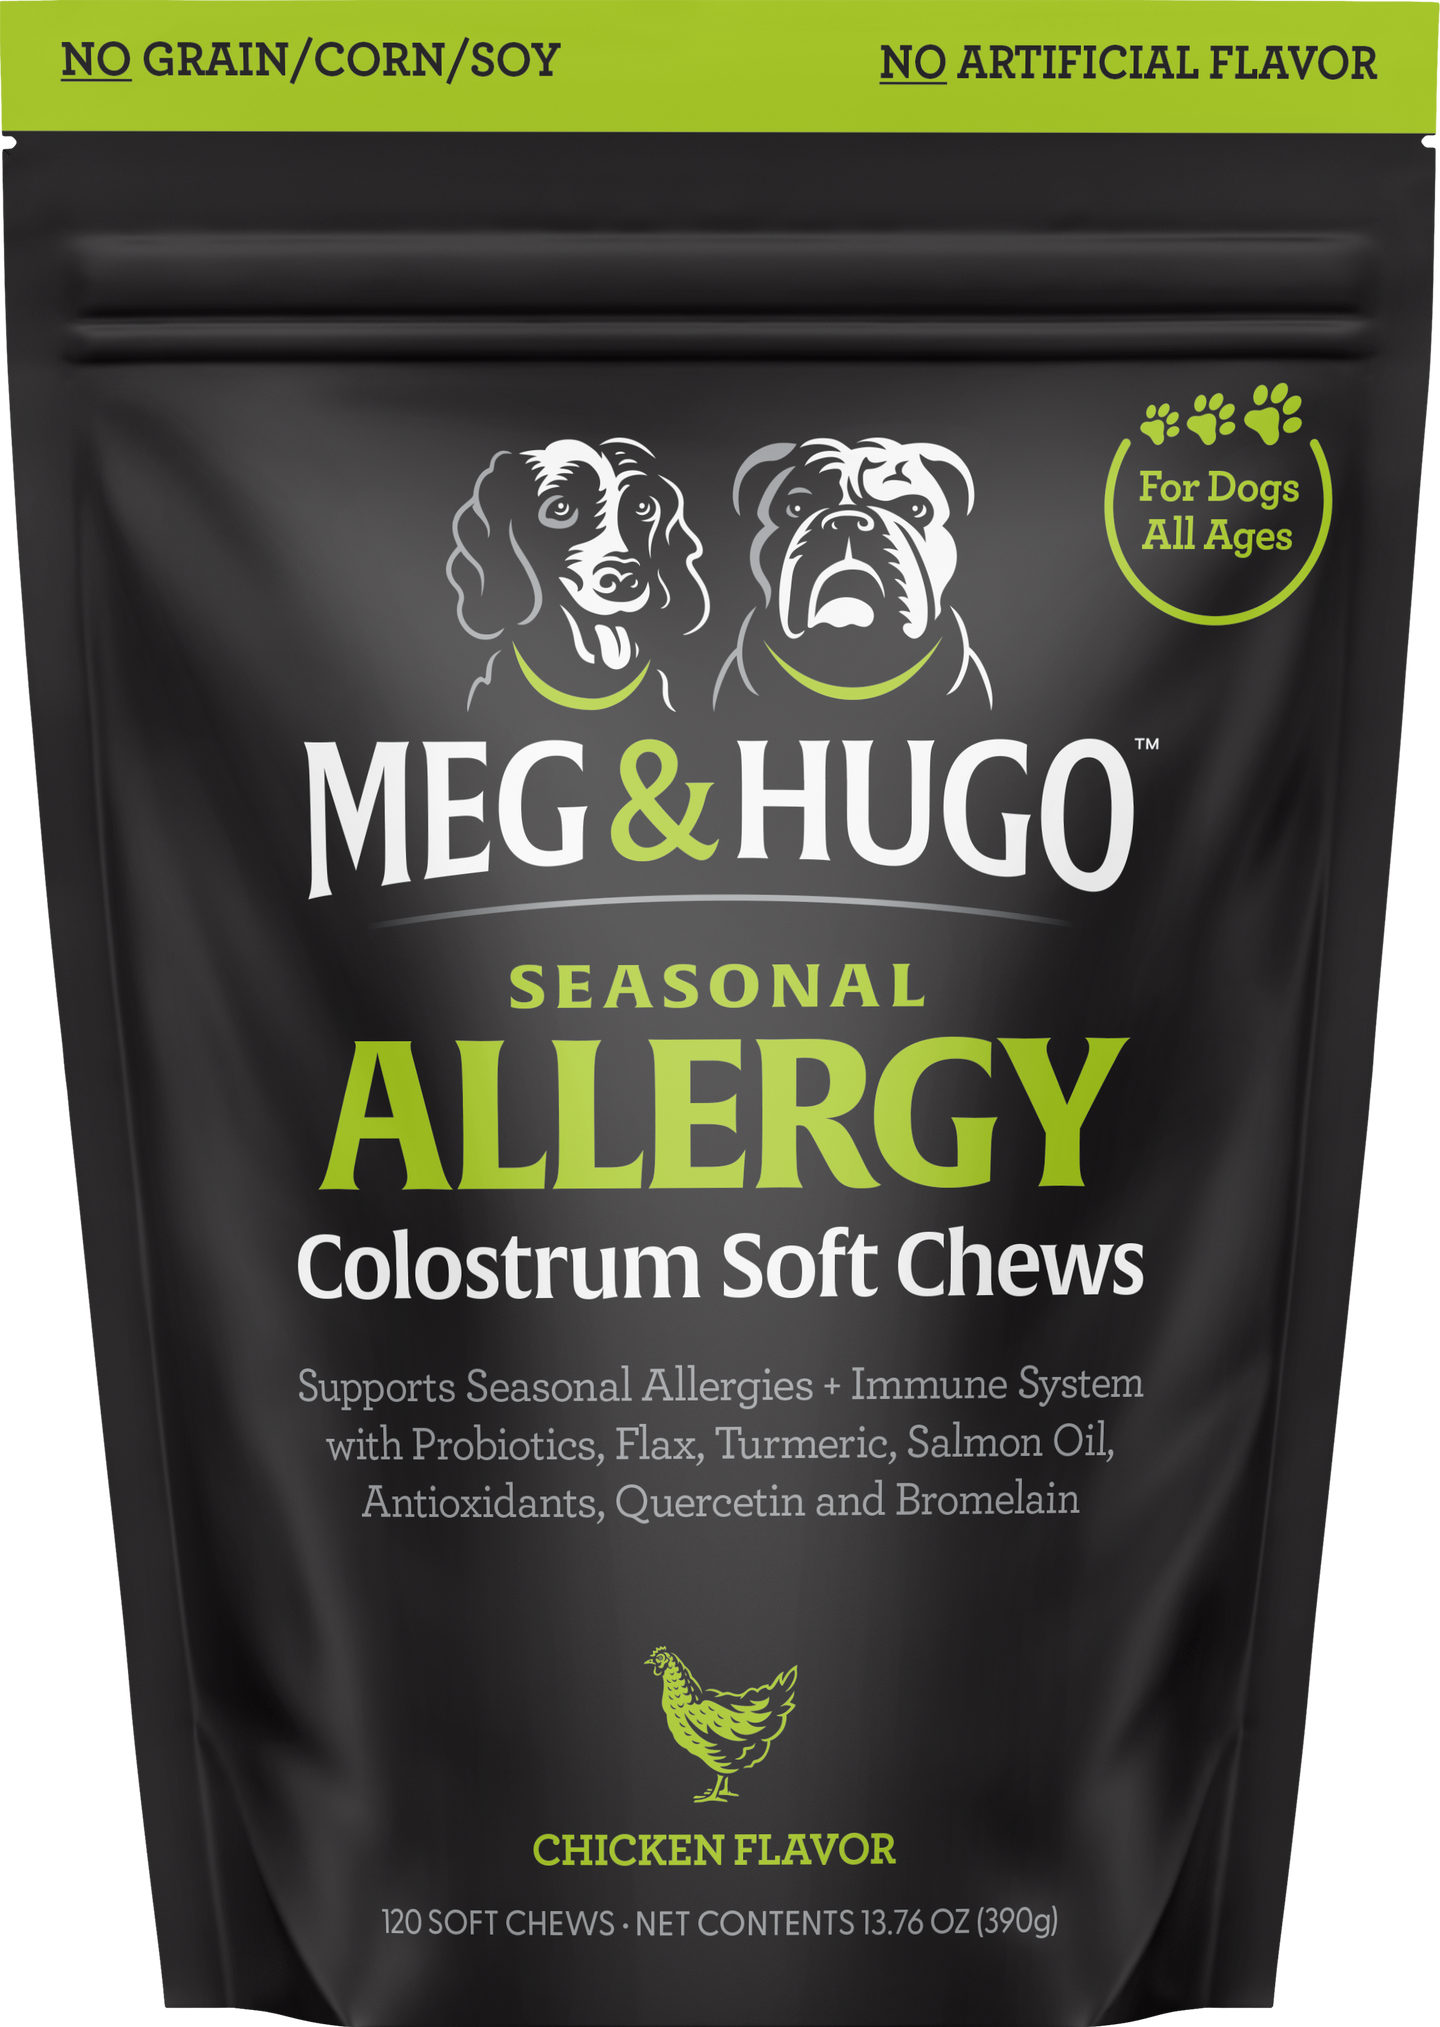 Seasonal Allergy Colostrum Soft Chews